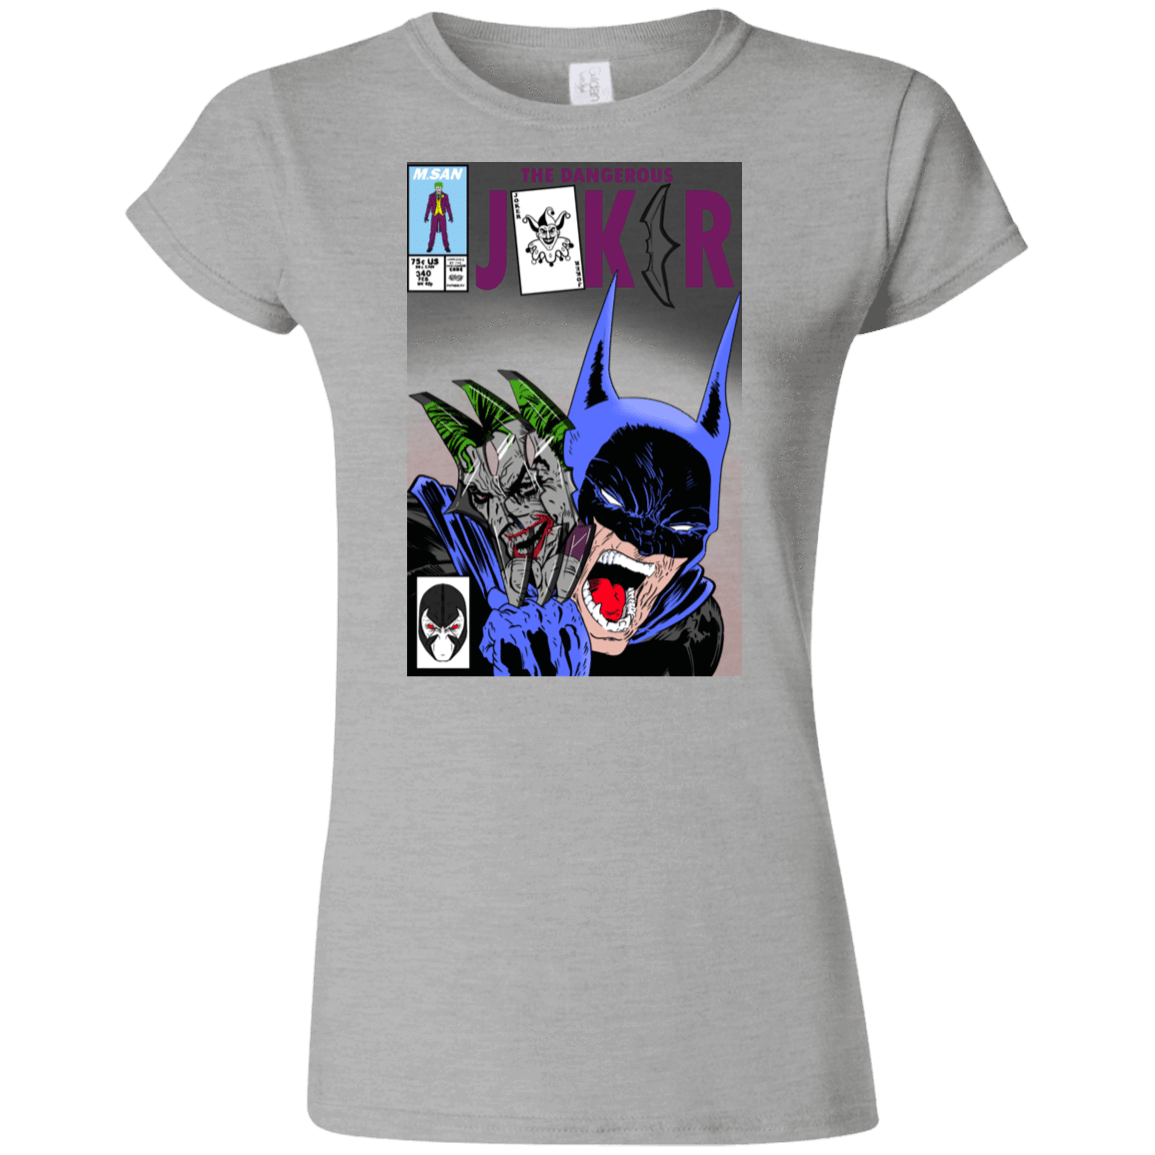 T-Shirts Sport Grey / S The Dangerous Joker Junior Slimmer-Fit T-Shirt